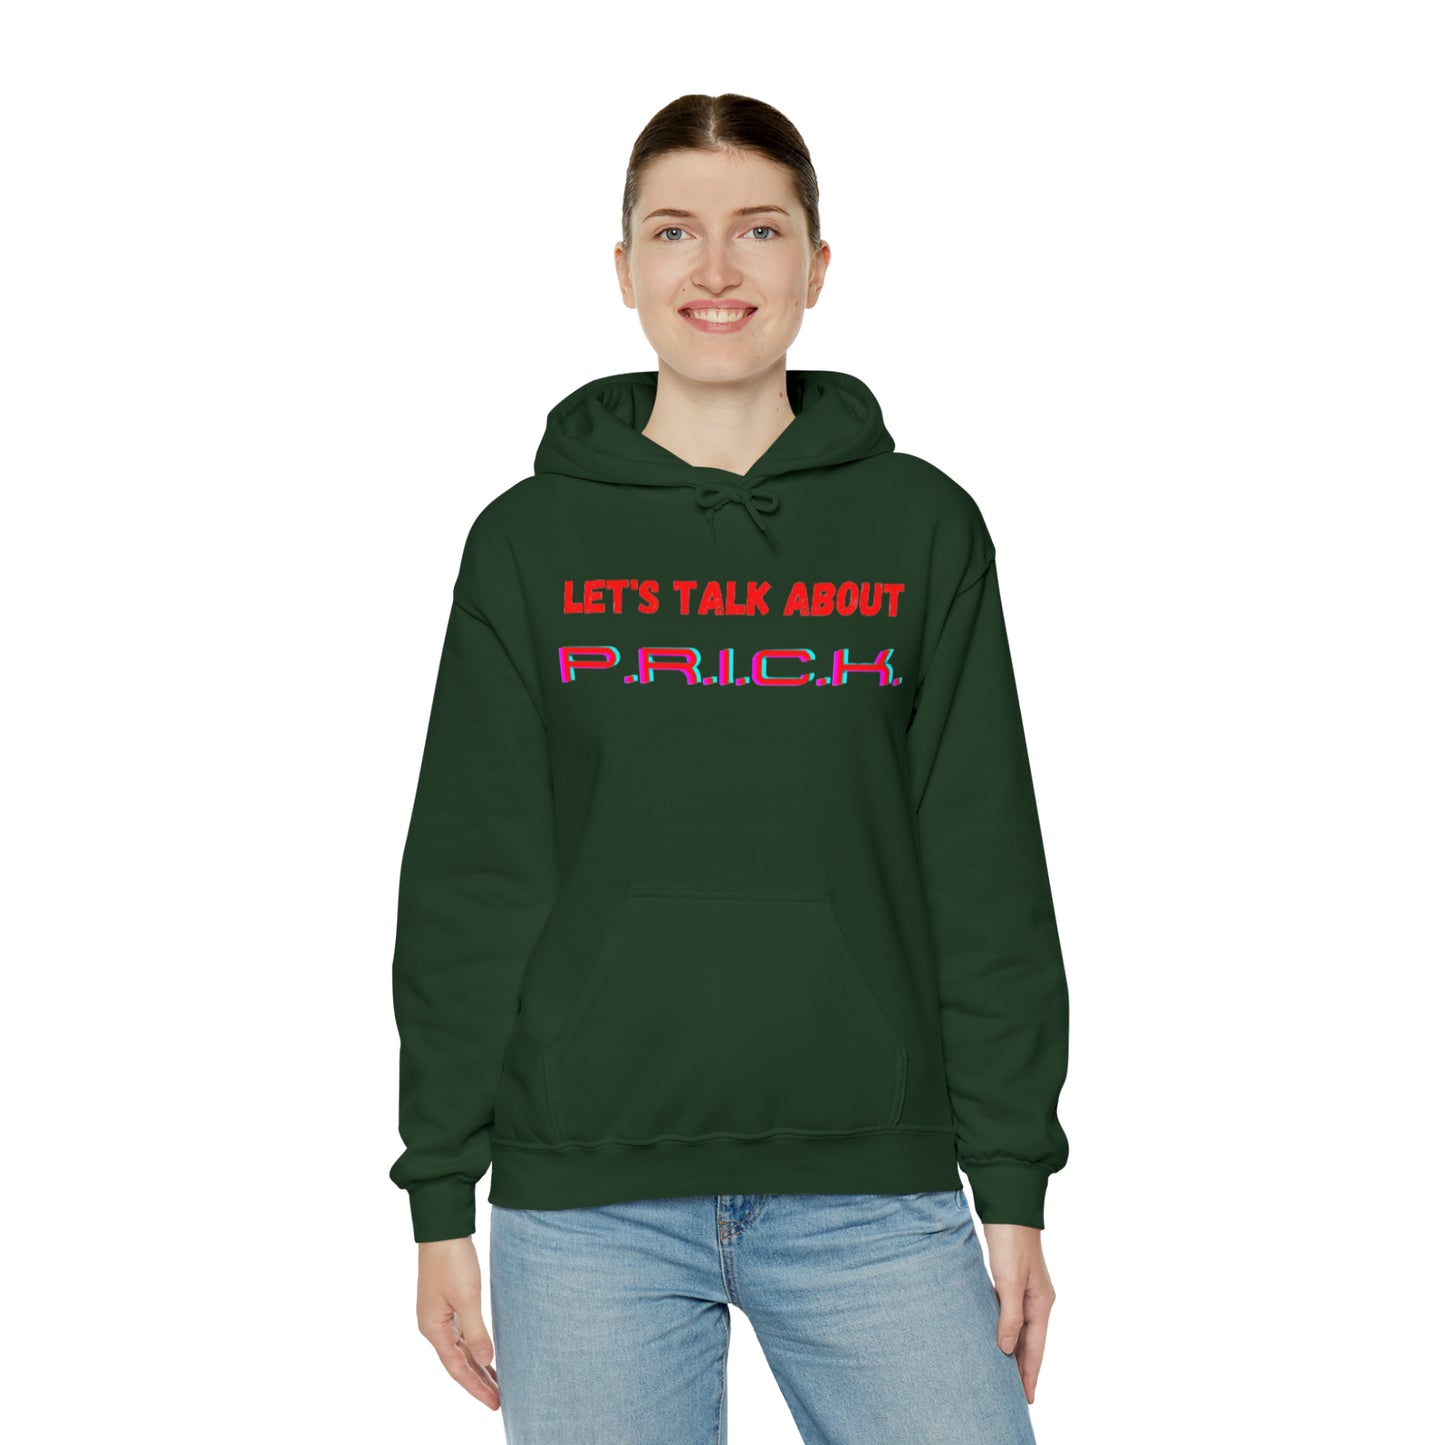 P.R.I.C.K. Unisex Hooded Sweatshirt